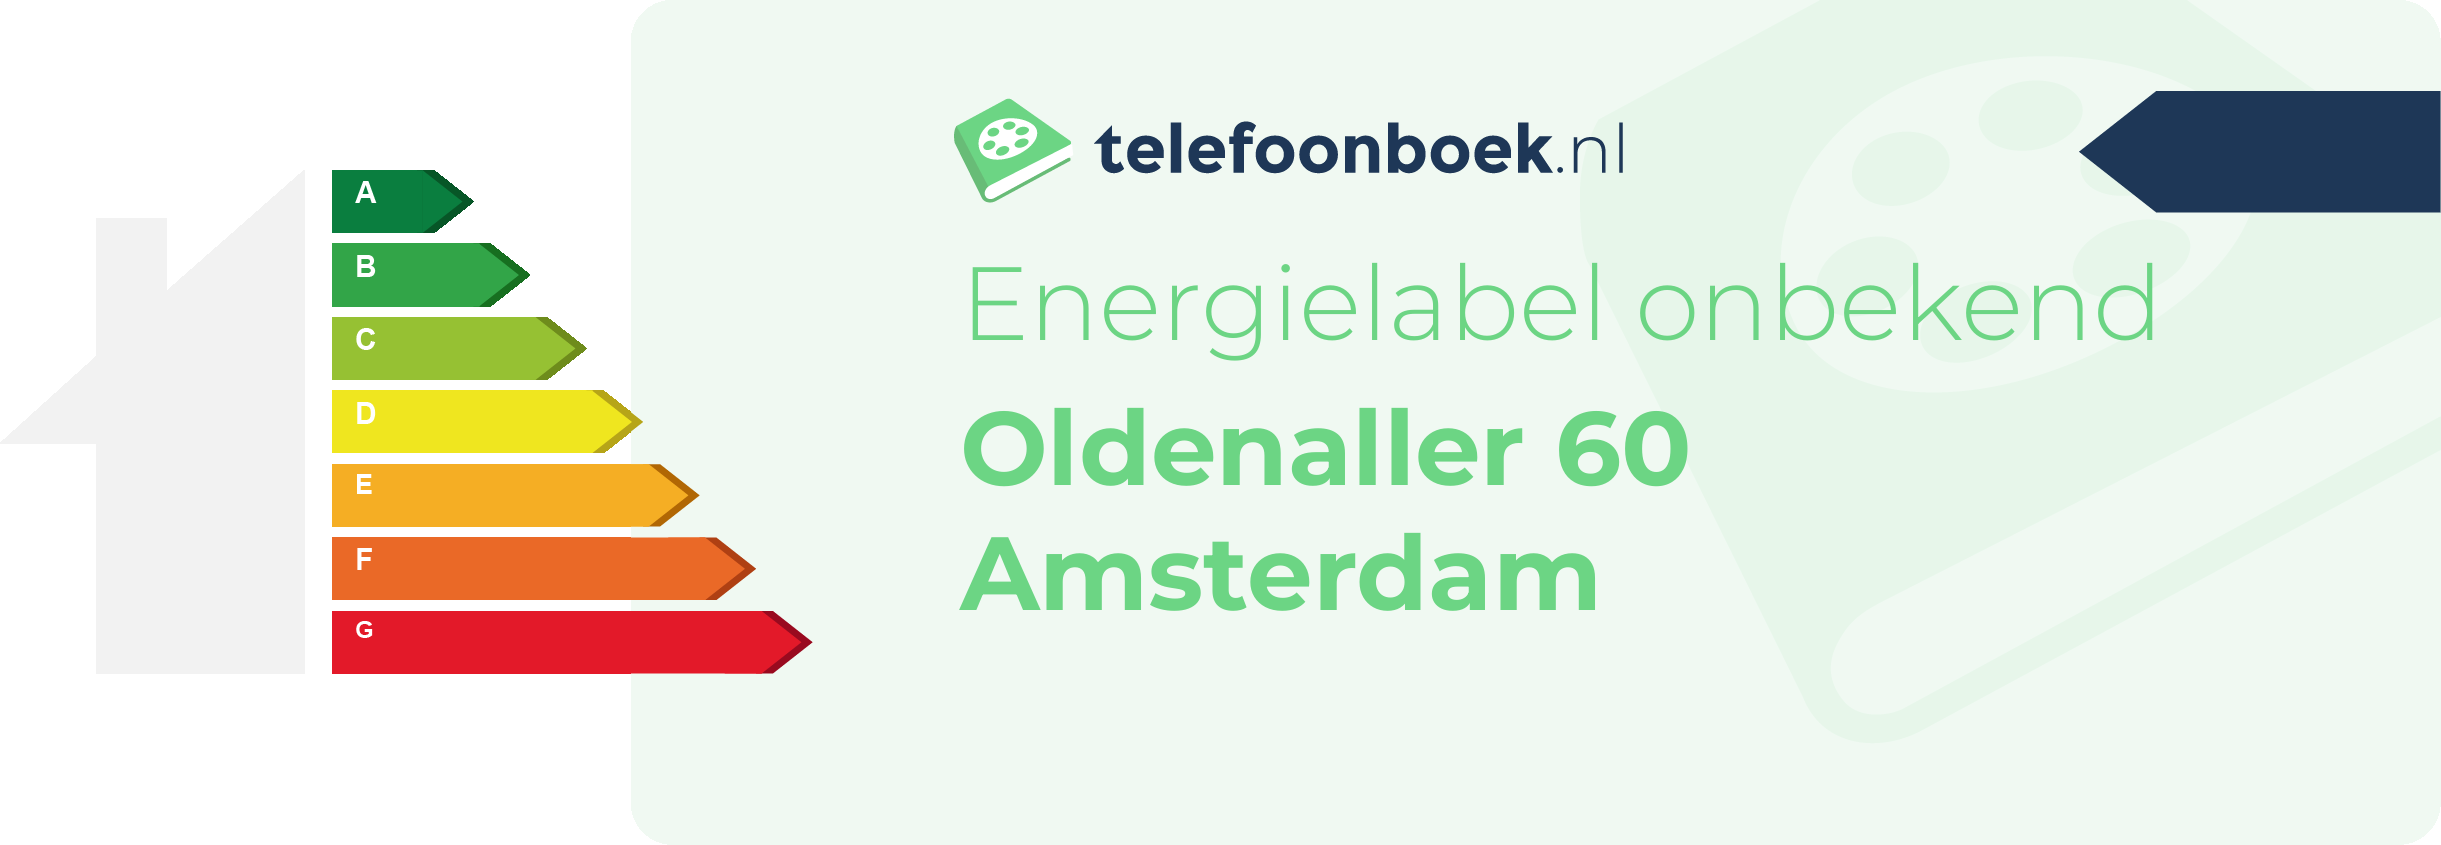 Energielabel Oldenaller 60 Amsterdam